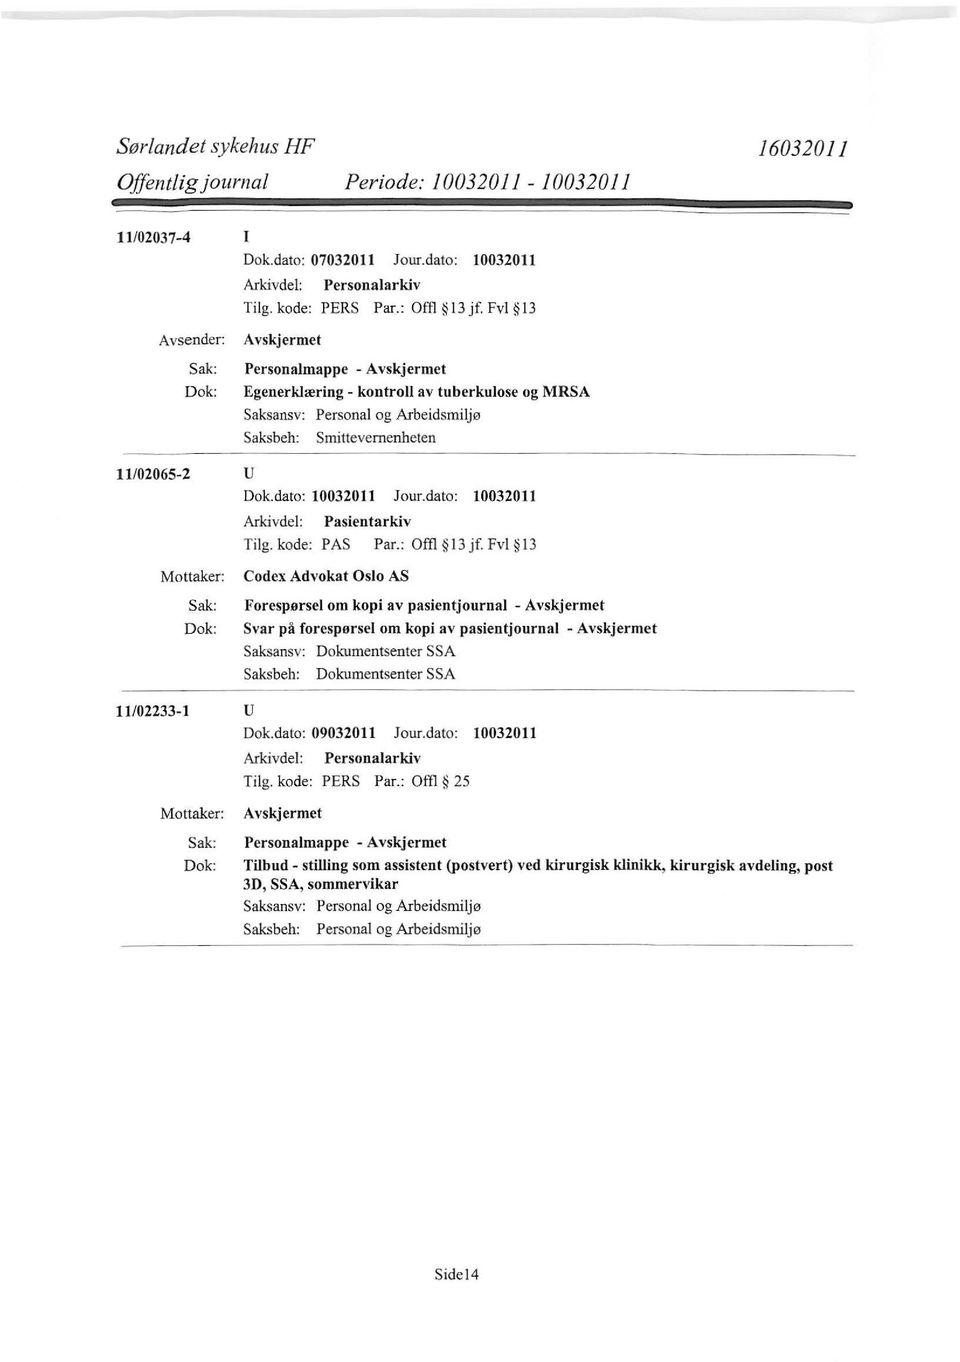 Fvl 13 Codex Advokat Oslo AS Forespørsel om kopi av pasientjournal - Svar på forespørsel om kopi av pasientjournal - Saksansv: Dokumentsenter SSA Dokumentsenter